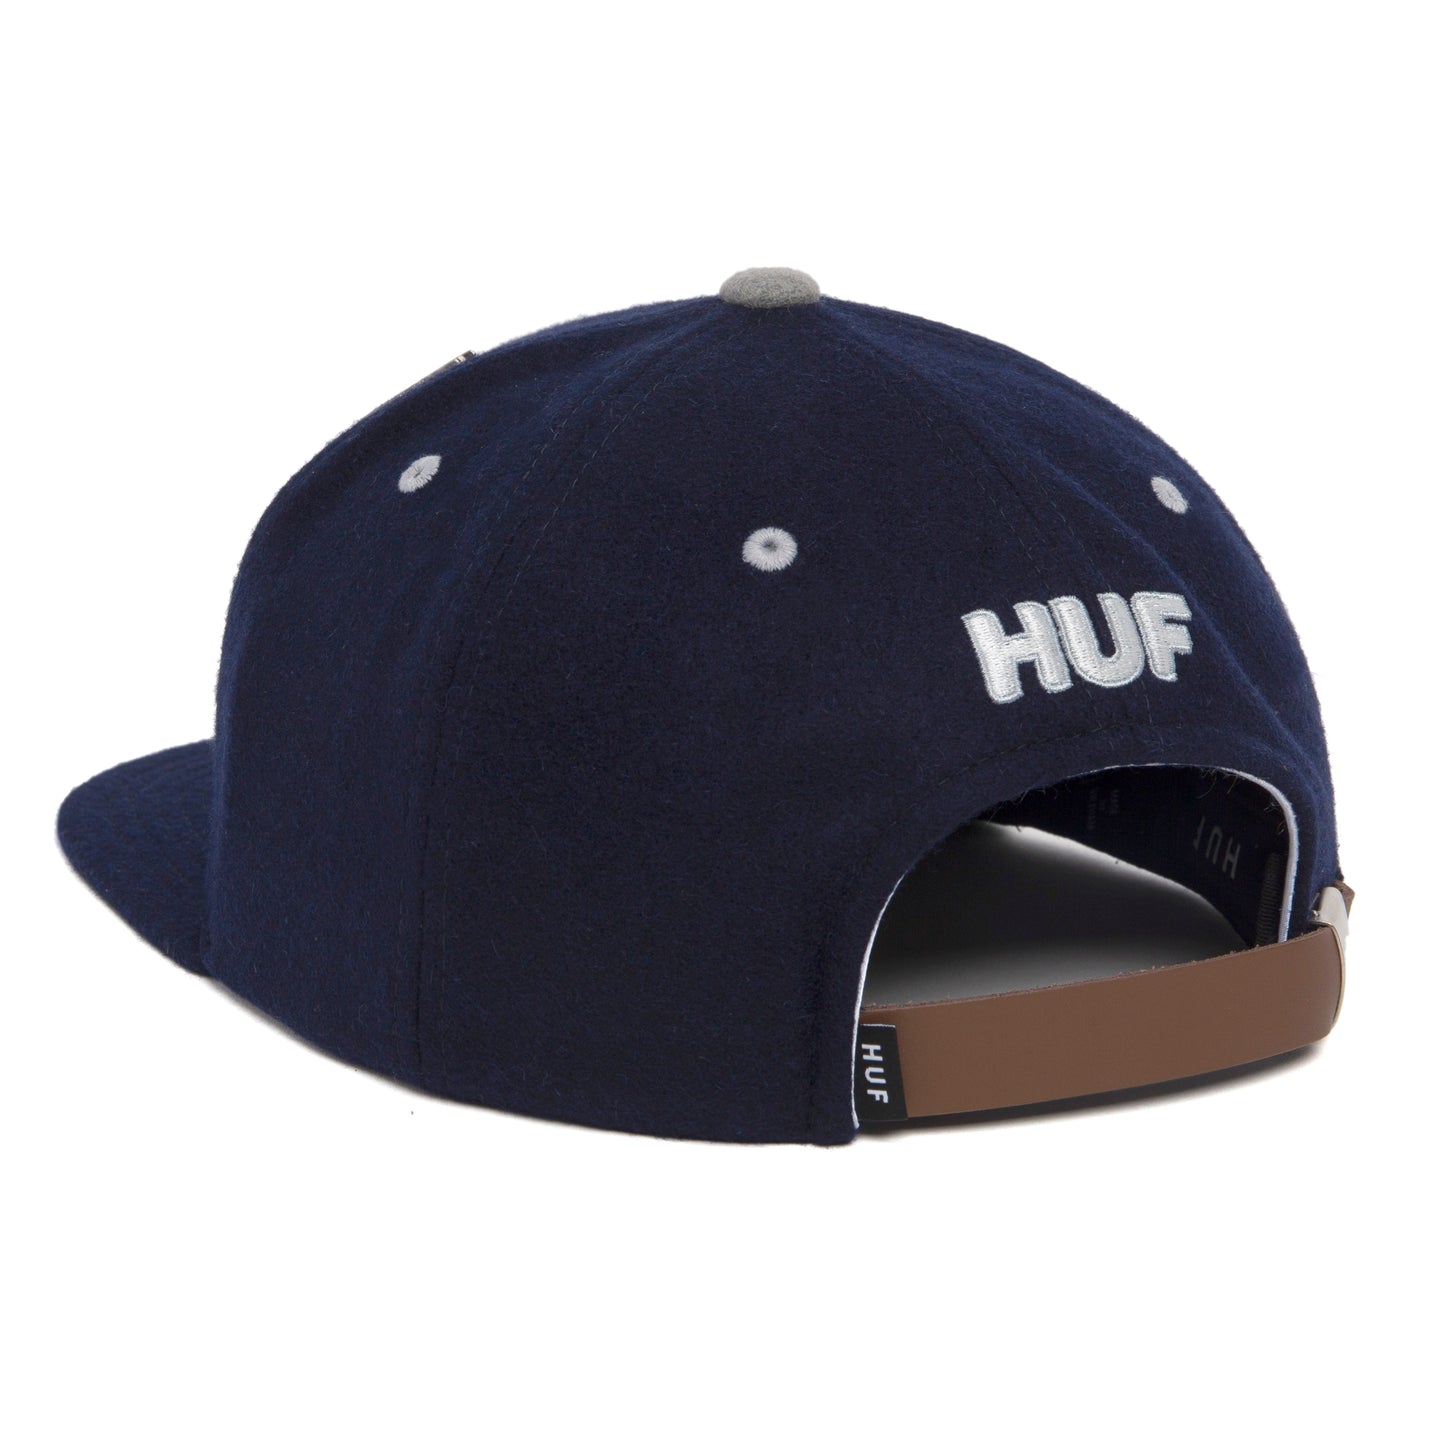 HUF - Home Base 6-Panel Cap - Navy - Headz Up 